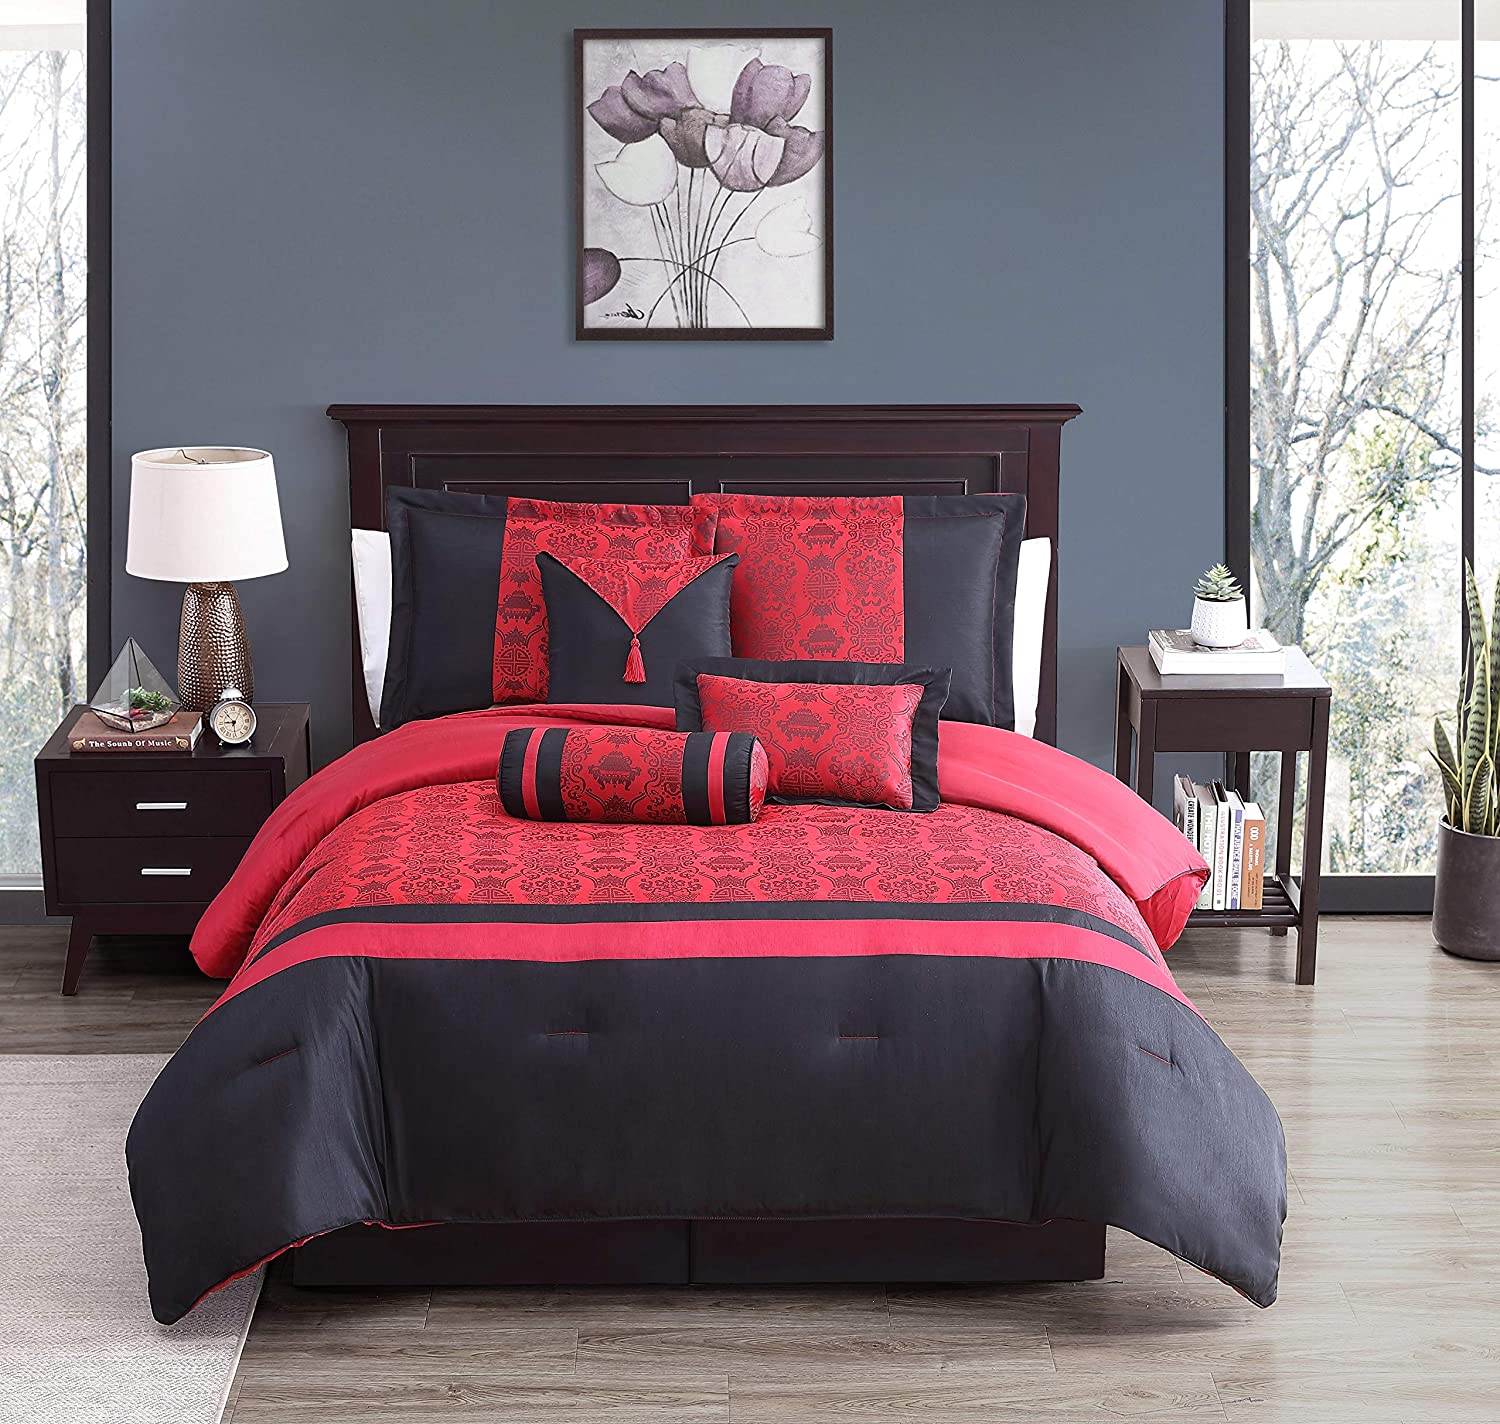 SNAKESKIN COBRA PYTHON Bedding Red Black Gray Comforter Set+Sheets K/Q/F/T Sizes 